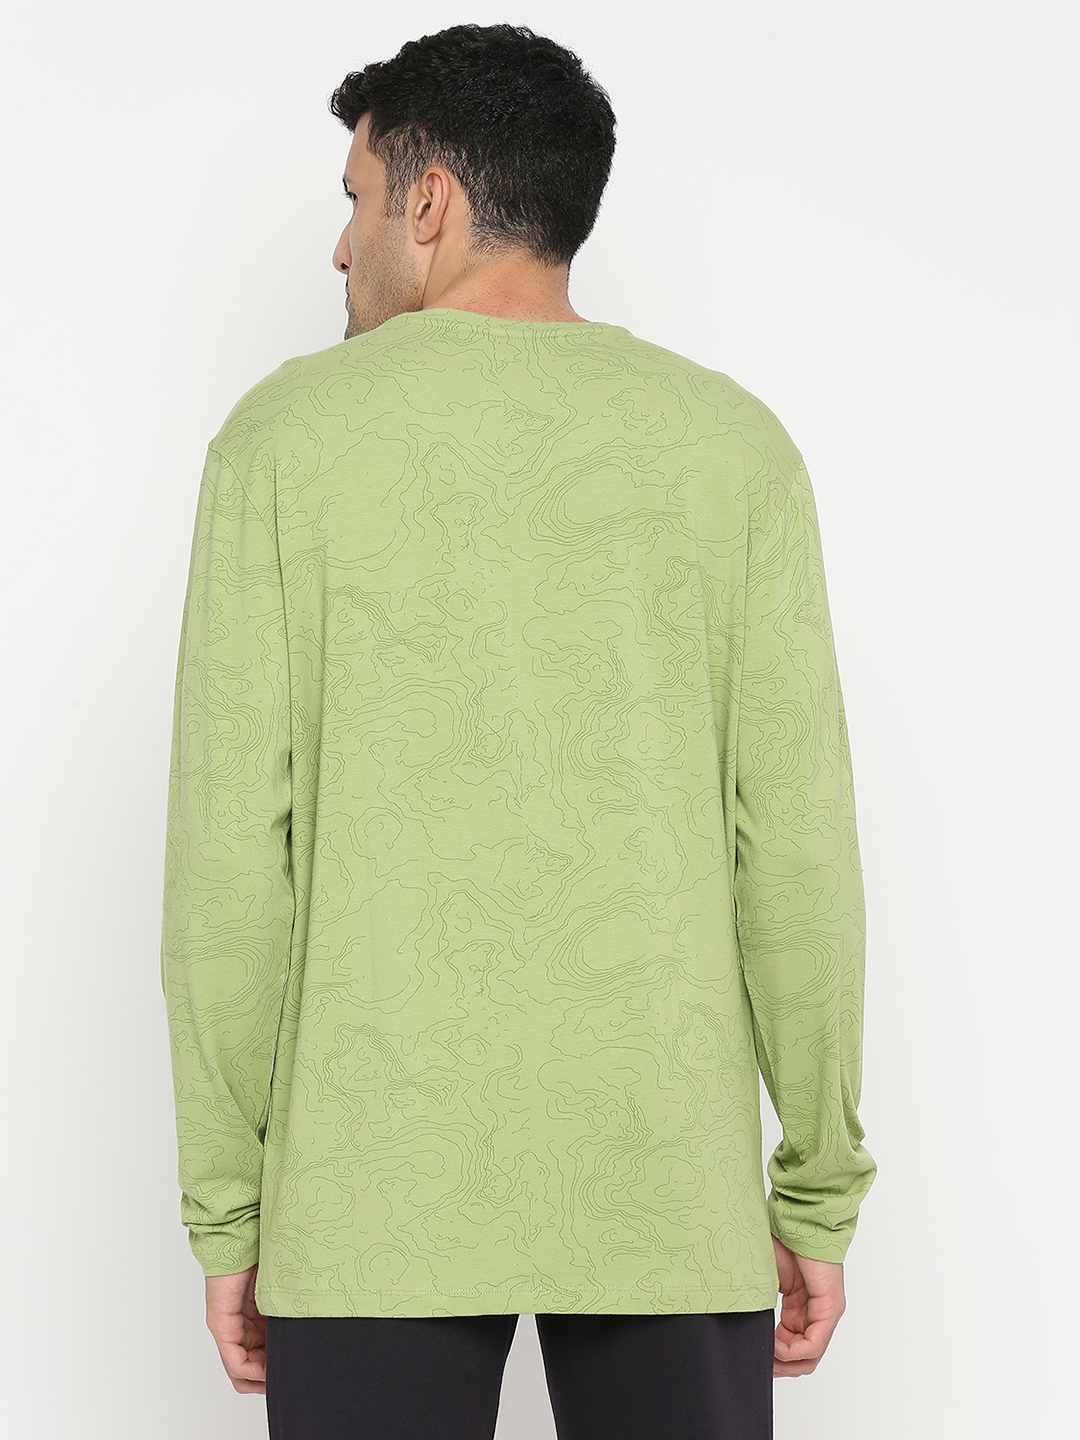 spykar | Spykar Dusty Green Cotton Blend Full Sleeve Printed Casual T-Shirt For Men 3